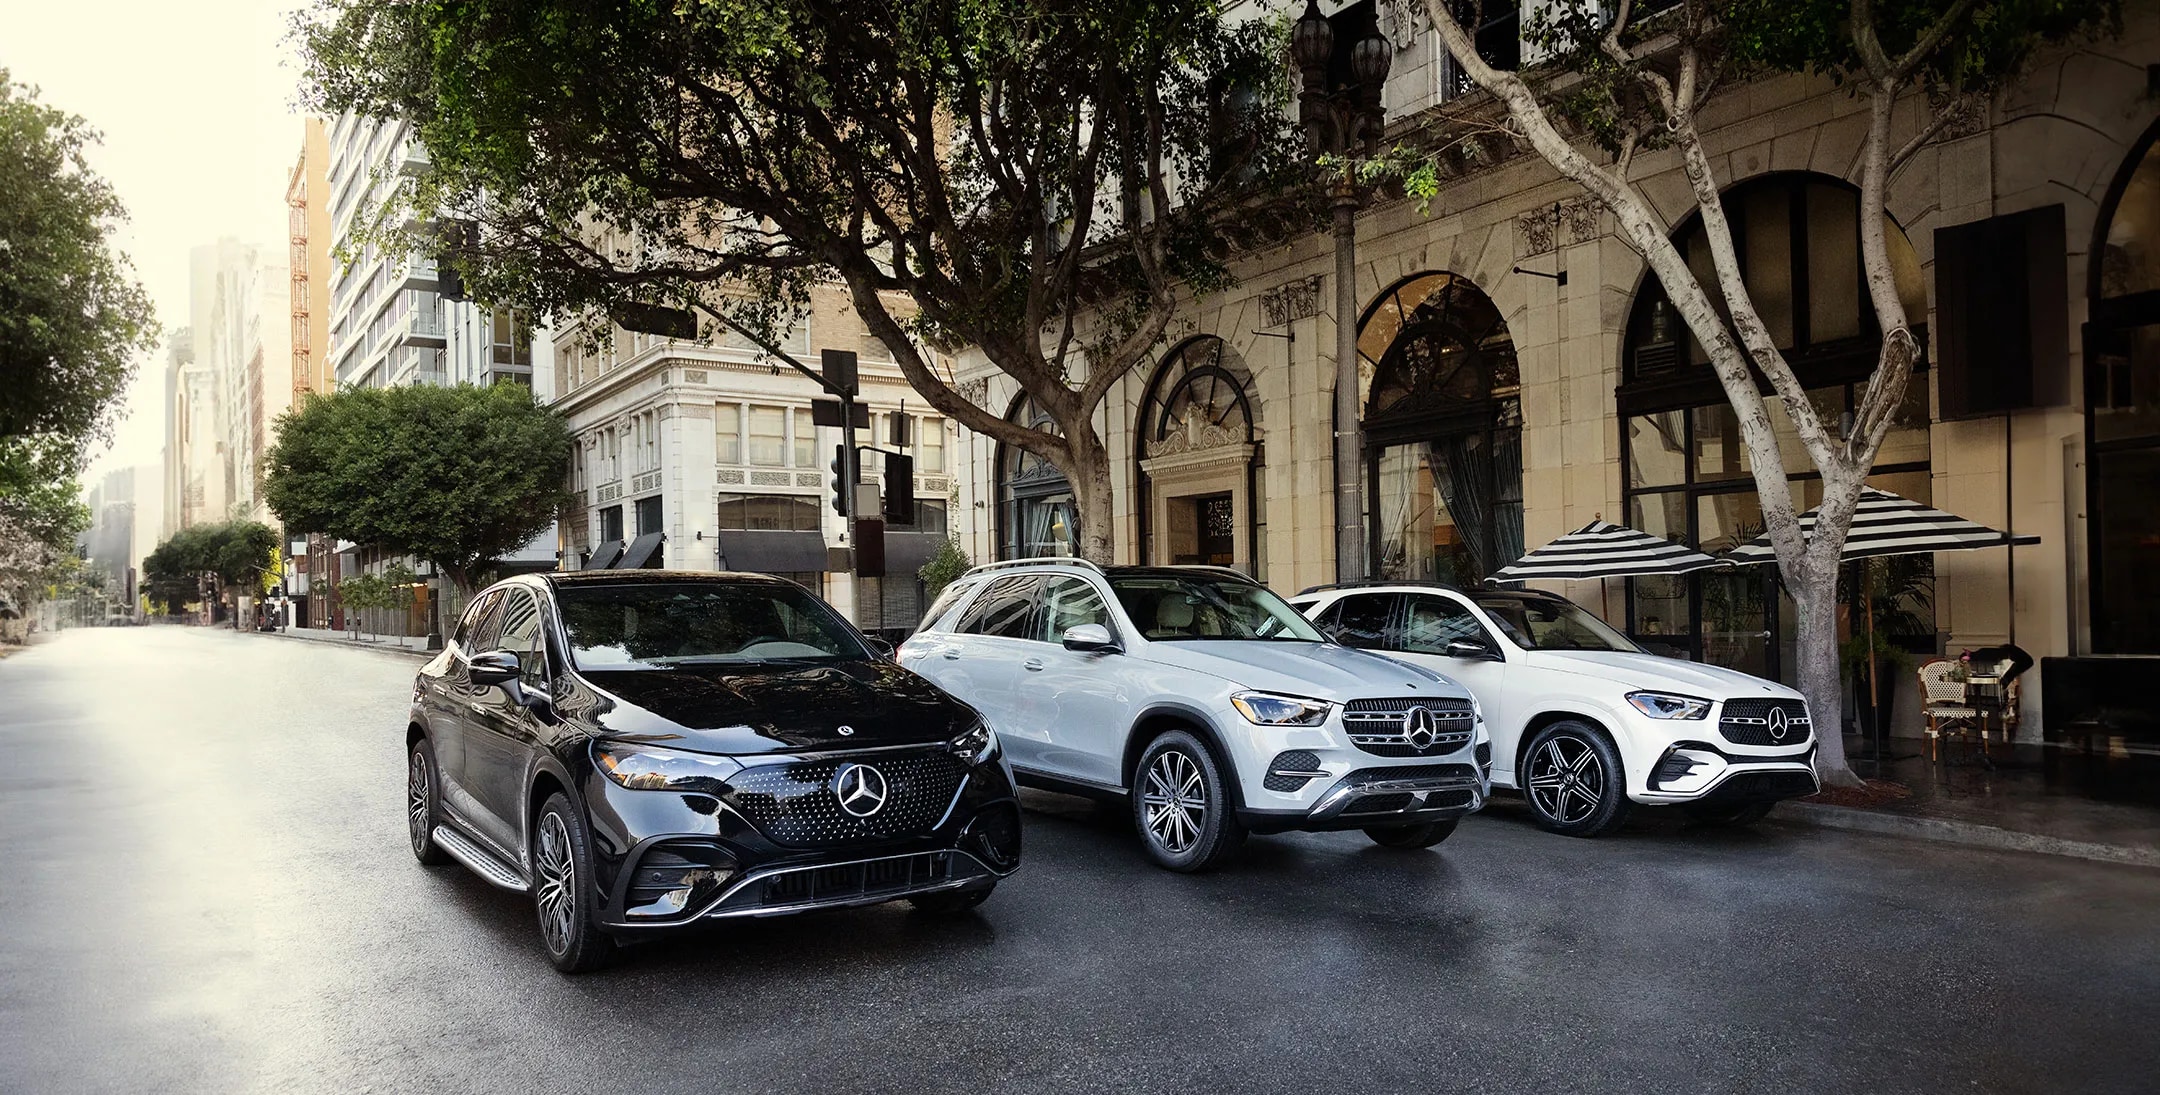 A lineup of new Mercedes-Benz vehicles